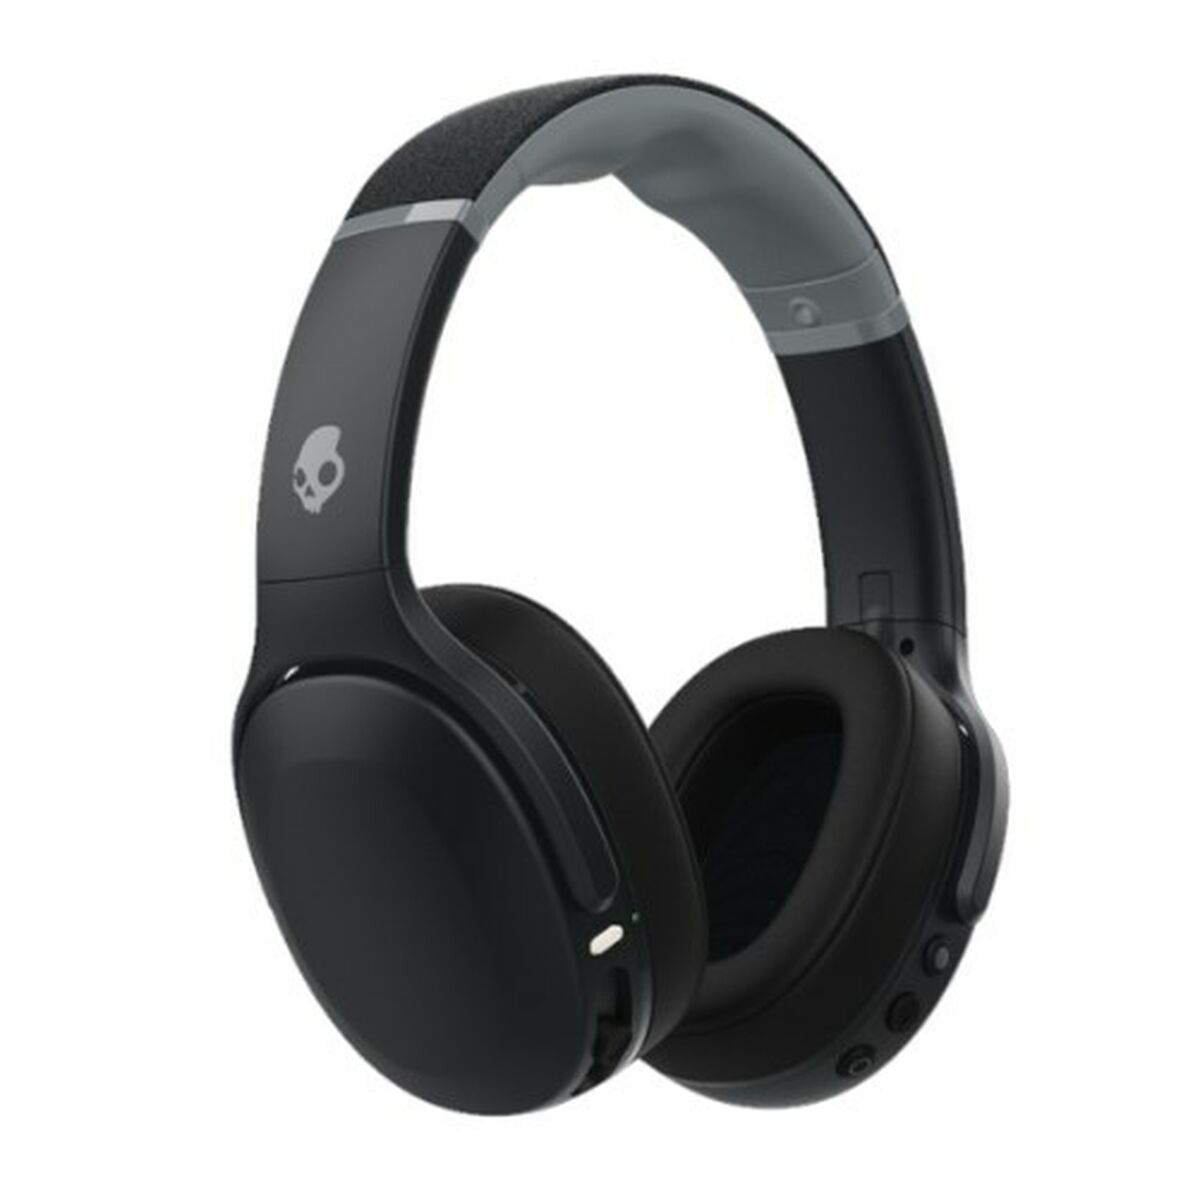 Auriculares Bluetooth Skullcandy S6evw-n740 - negro - 